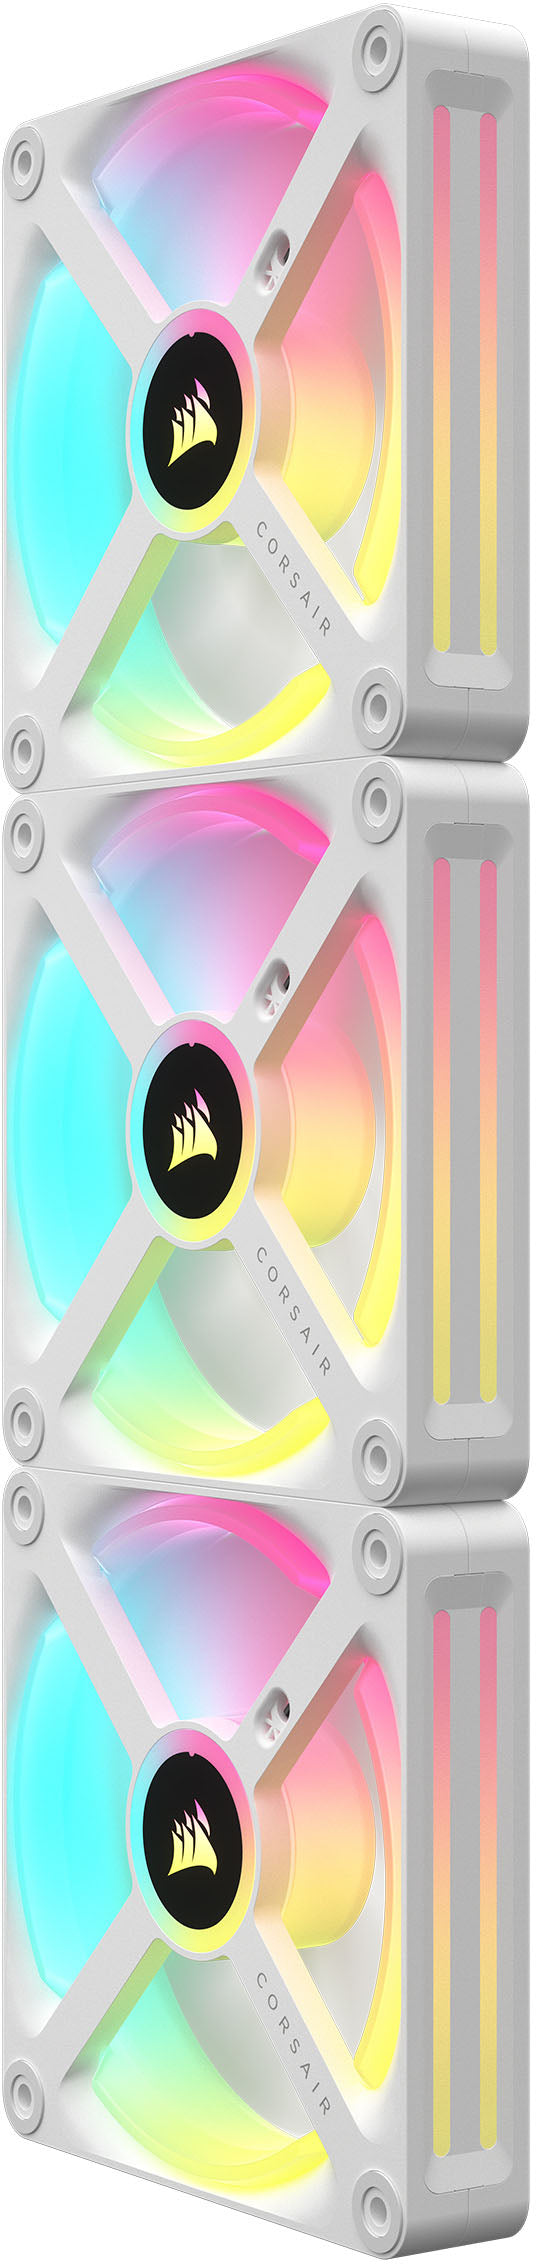 CORSAIR iCUE LINK QX120 RGB 120mm PWM Fans Starter Kit - White_7